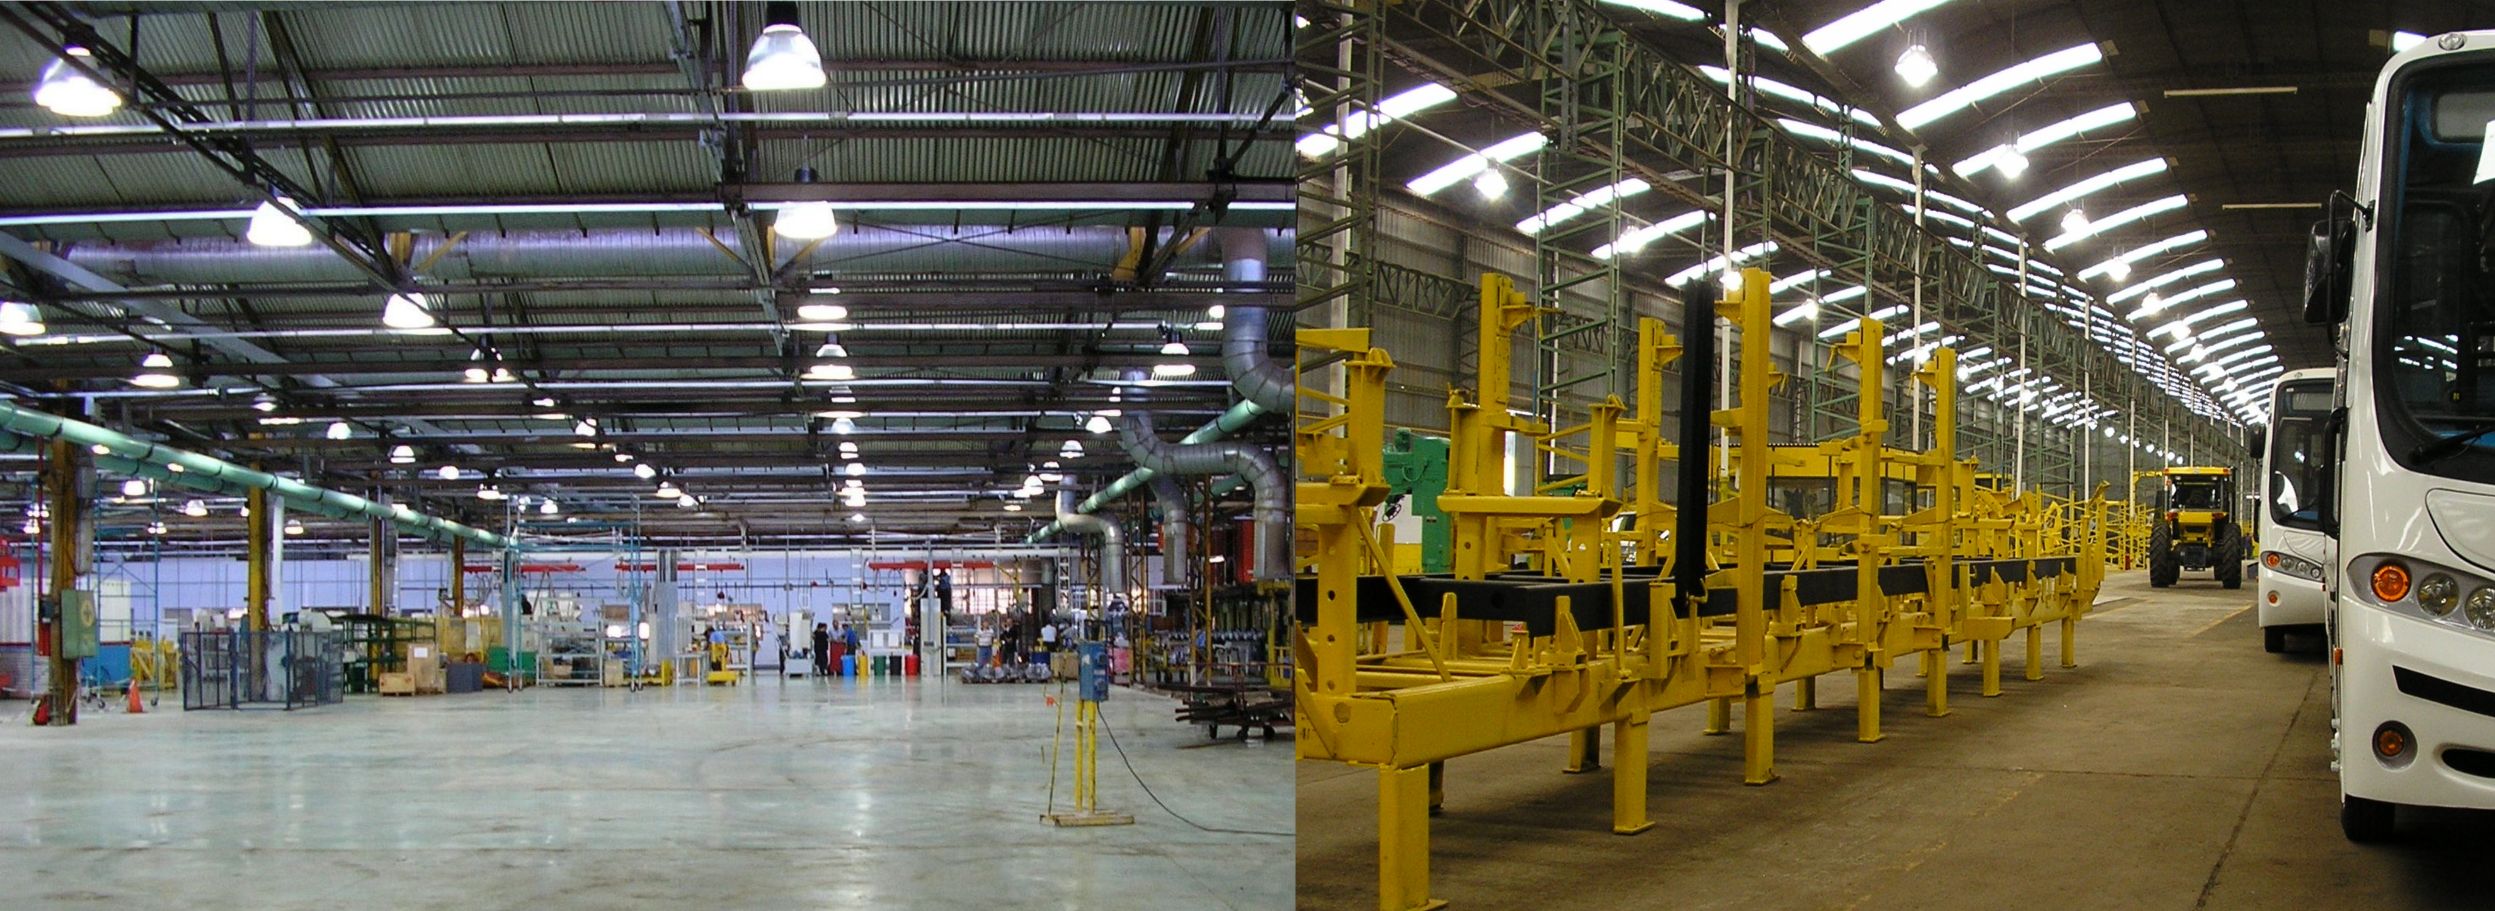 Imagen de aplicación de iluminación comercial en lineas de producción en fabricas.